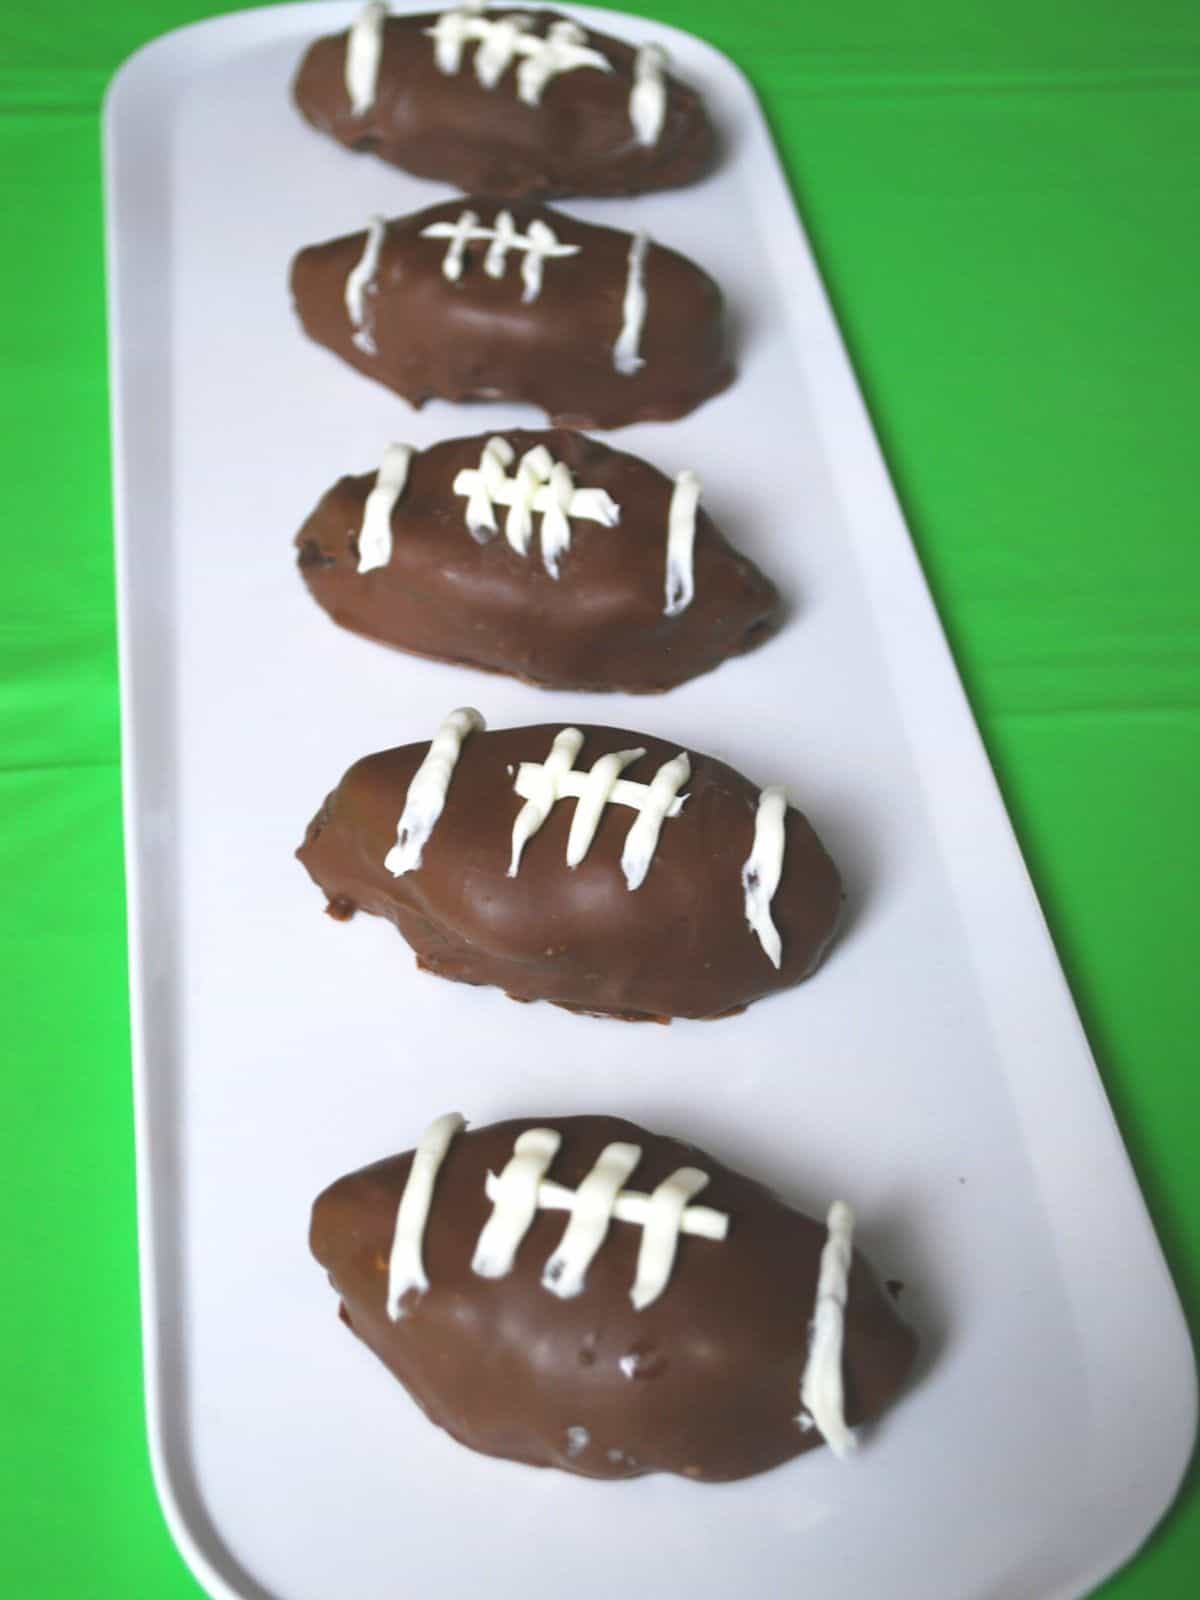 football brownies on tray